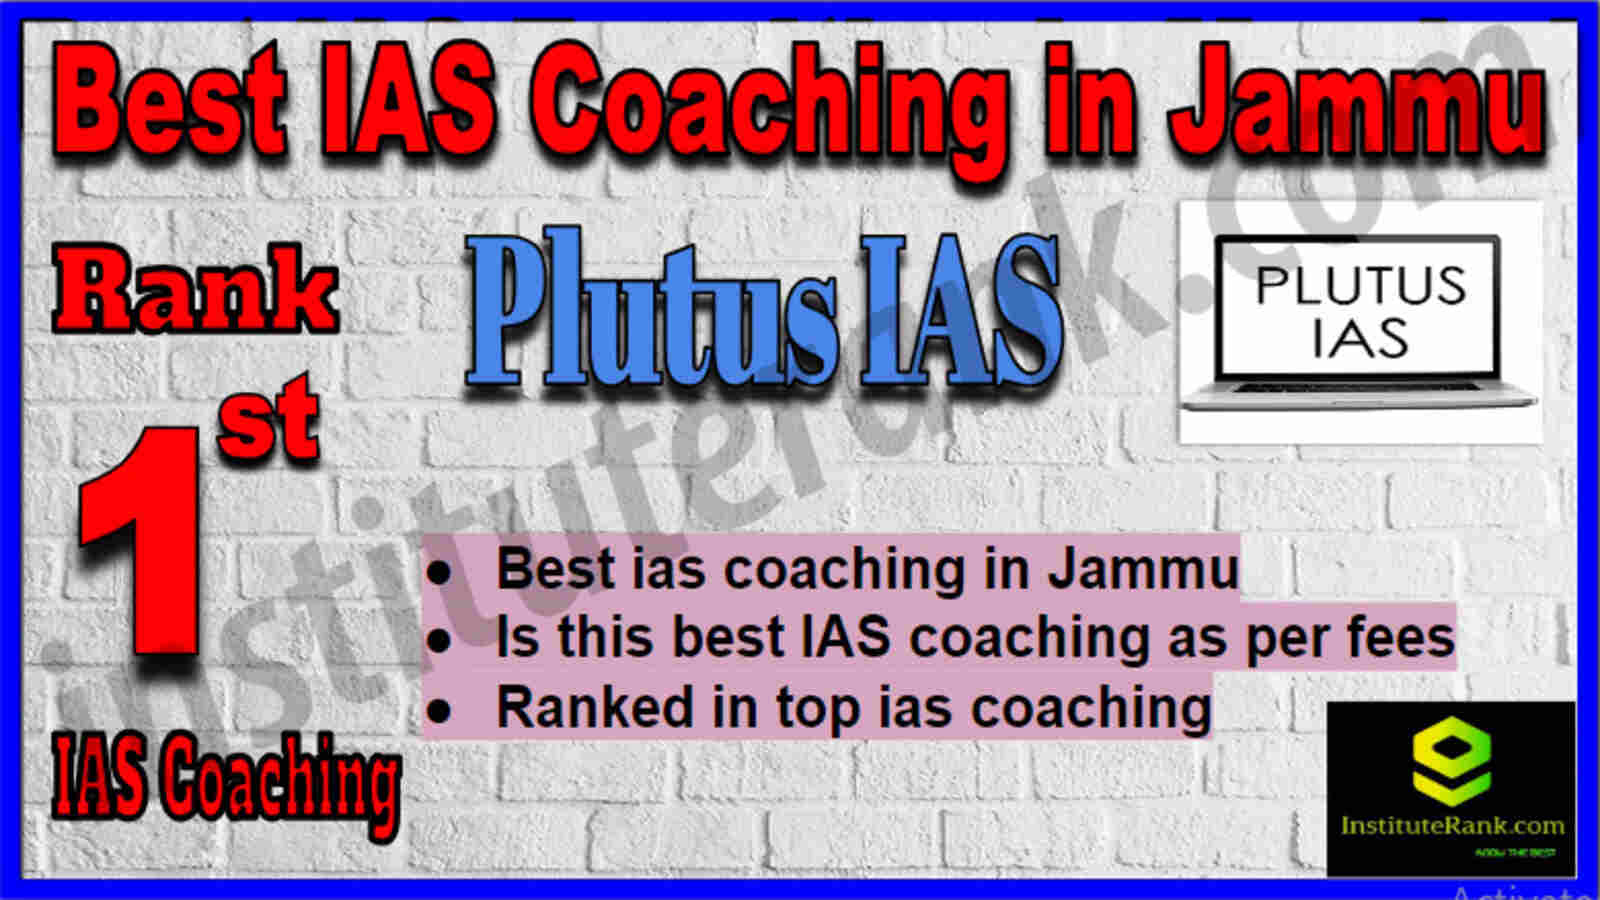 Rank 1 Best IAS Coaching in Jammu